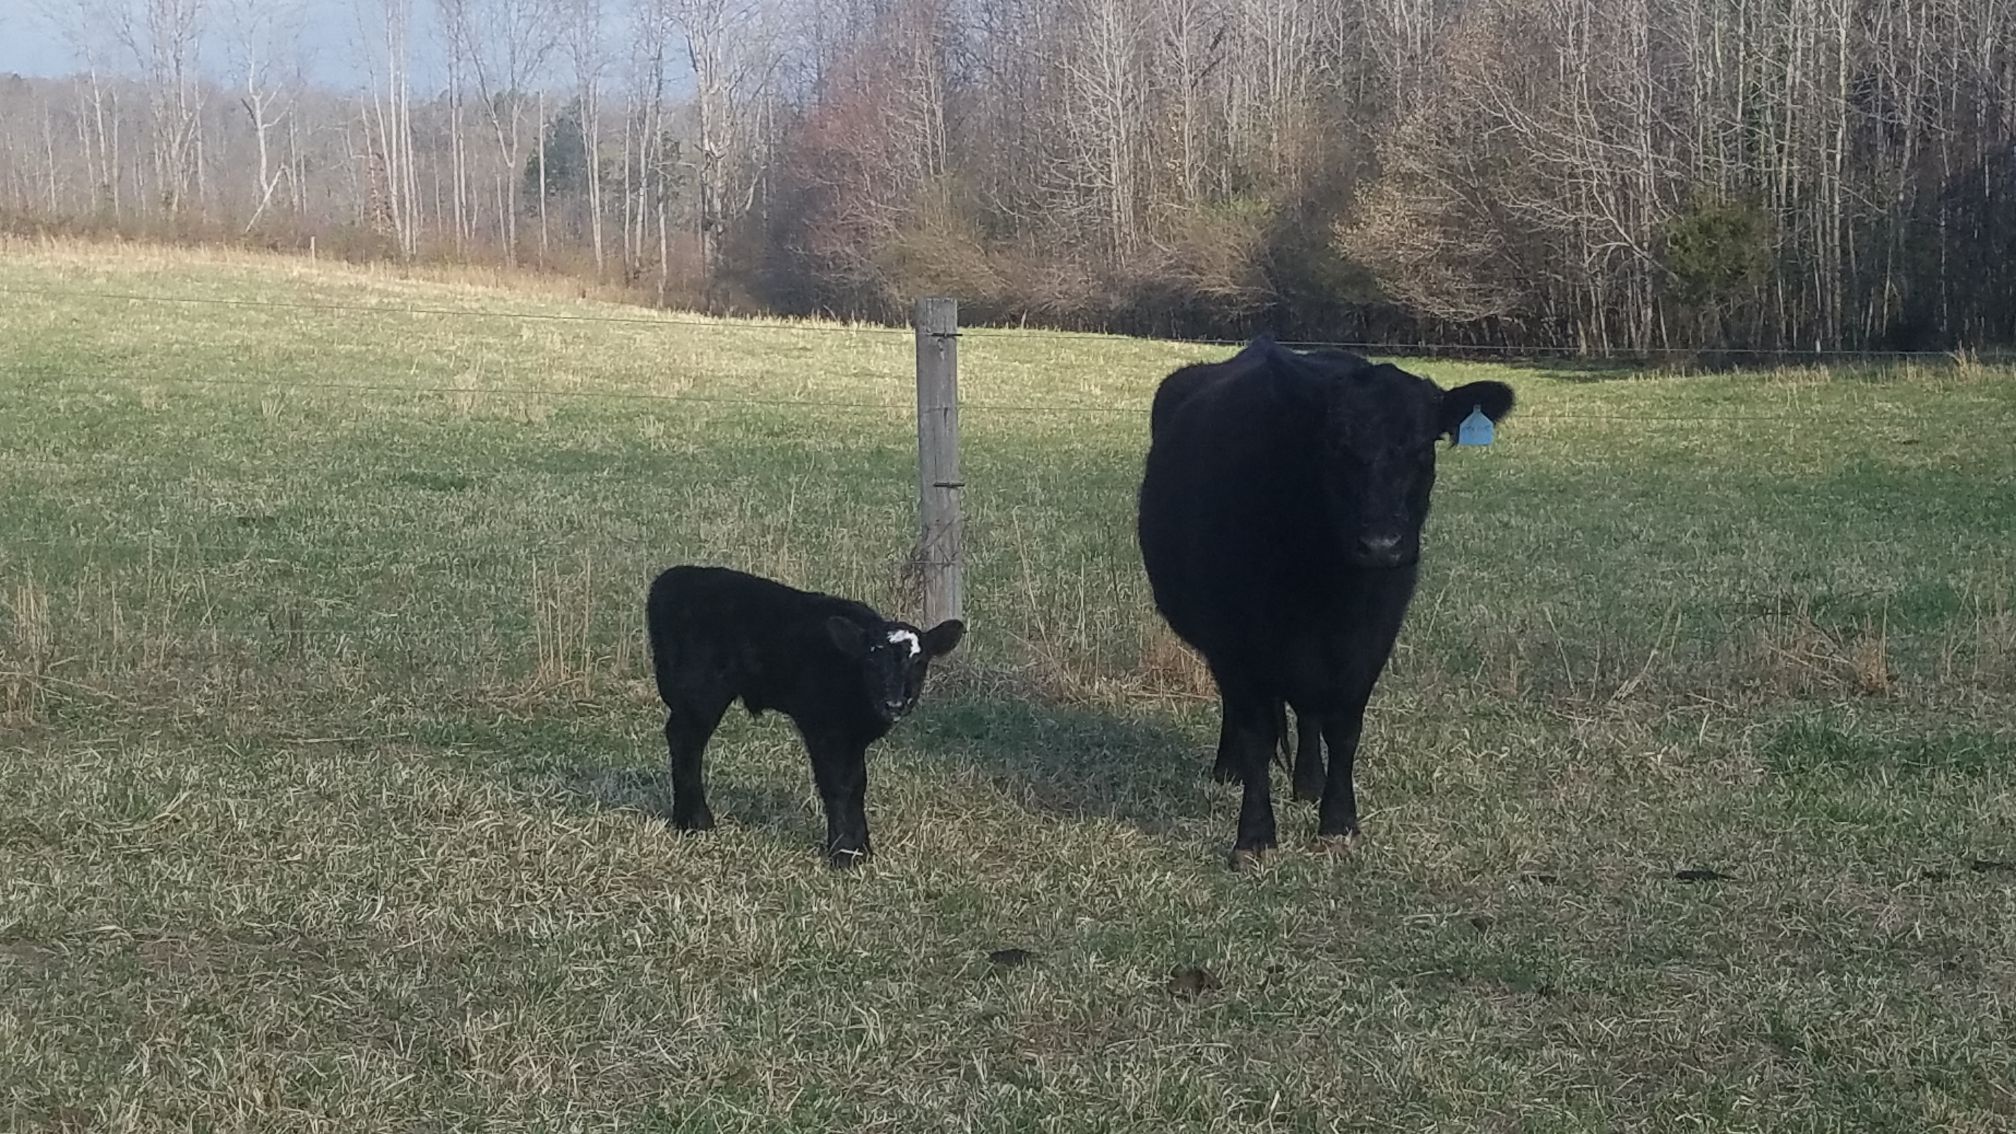 first calf born on Simply Grazin' farms in 2022